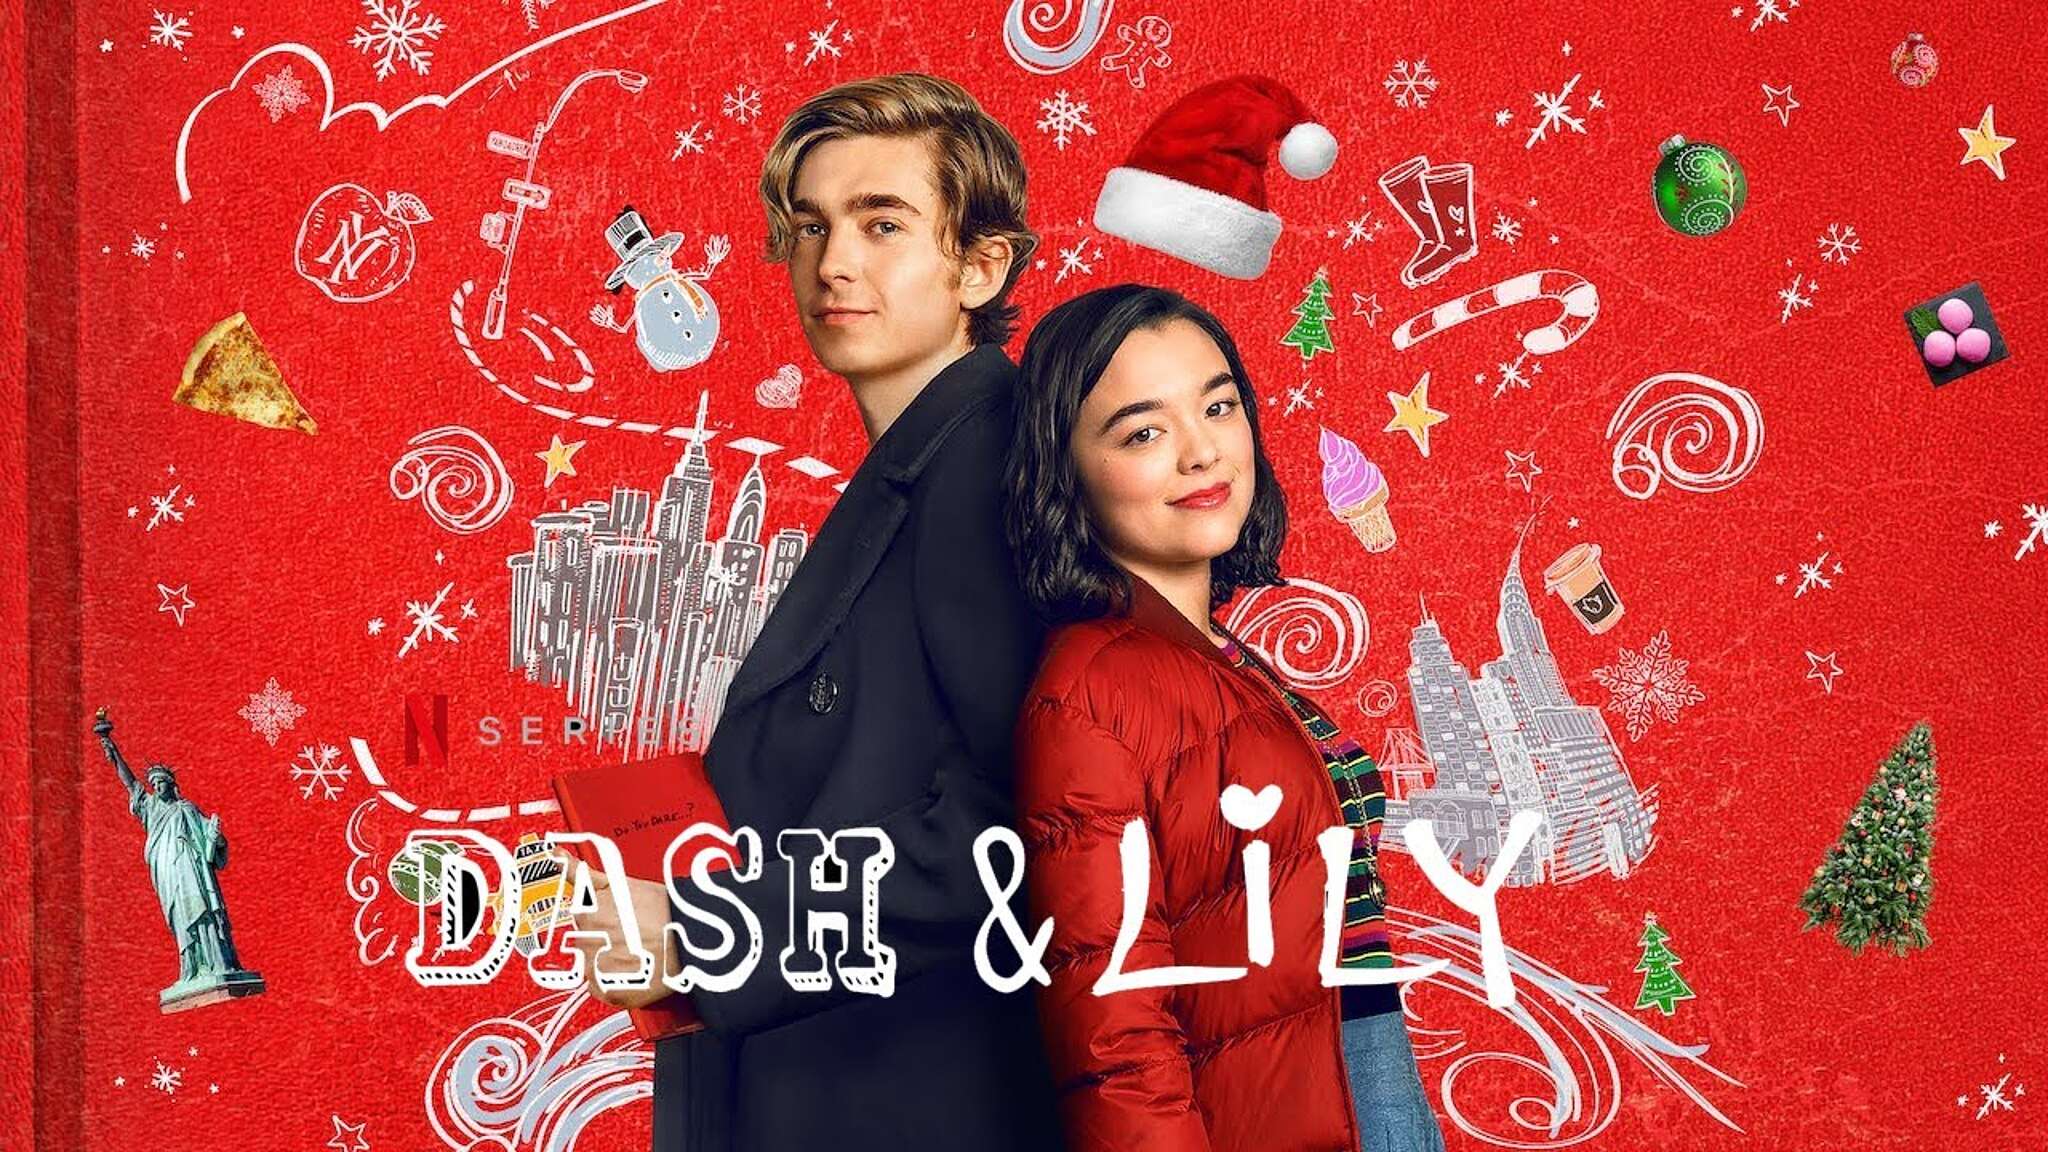 Dash & Lilly Official trailer (HD) Season 1 (2020)